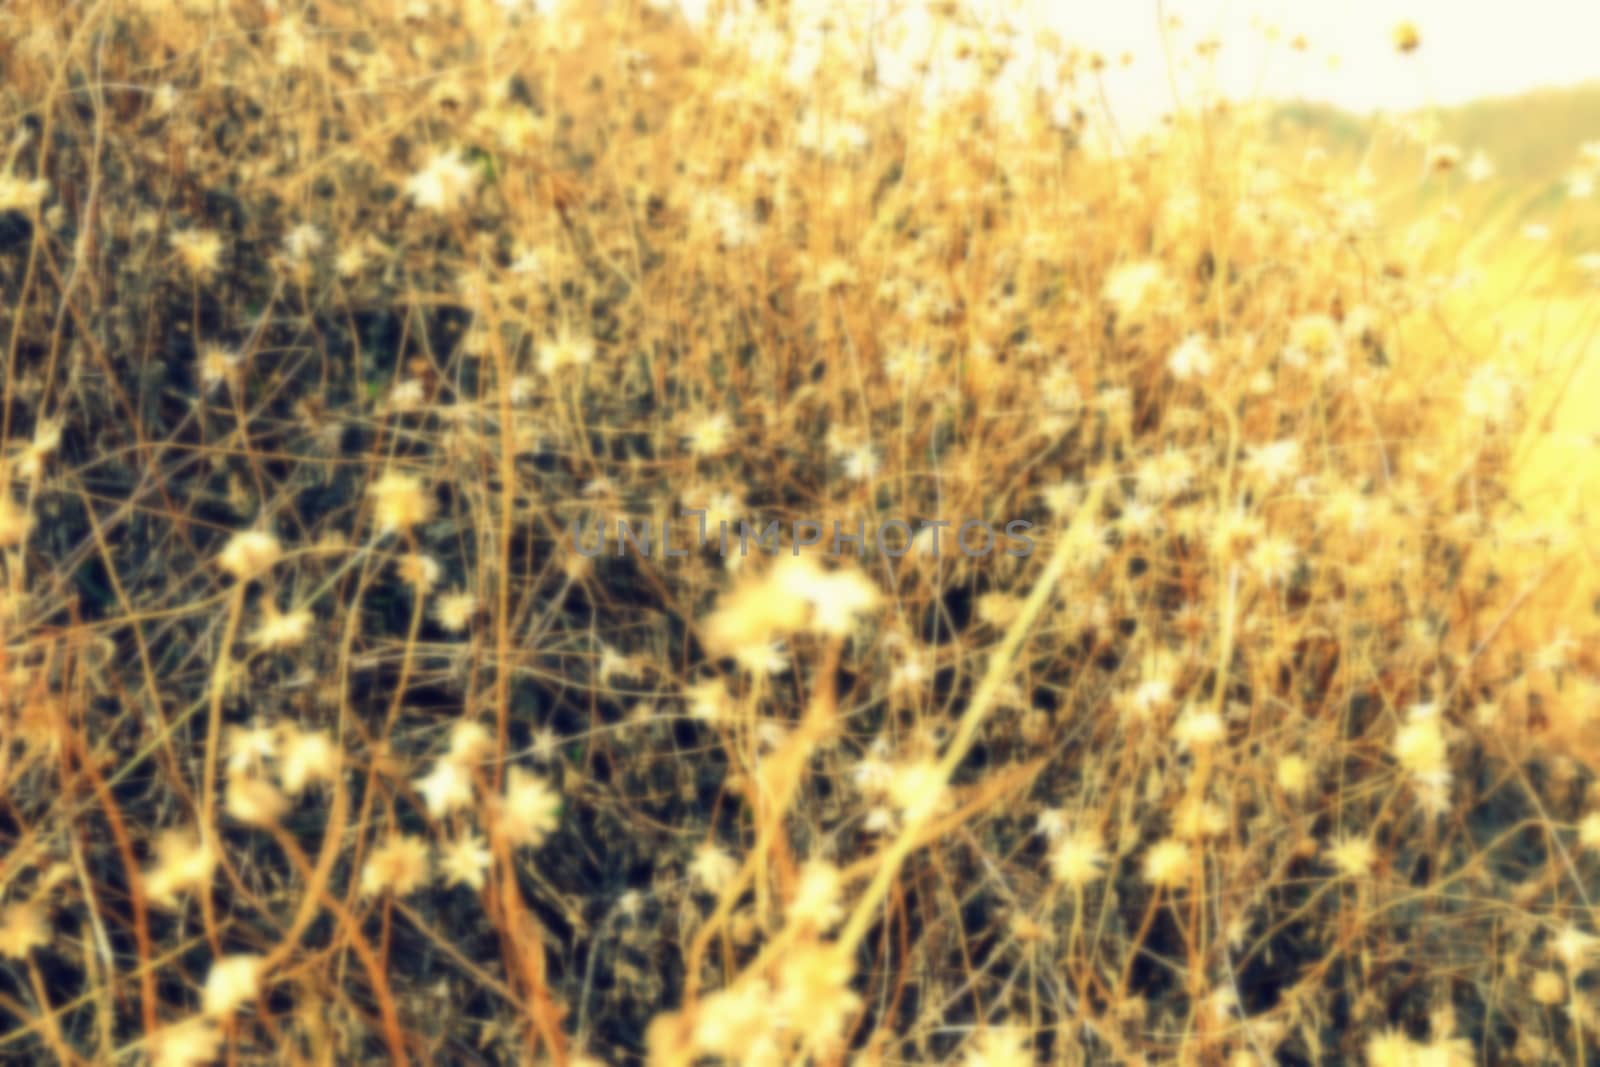 Blurred Grass Flowers Background.